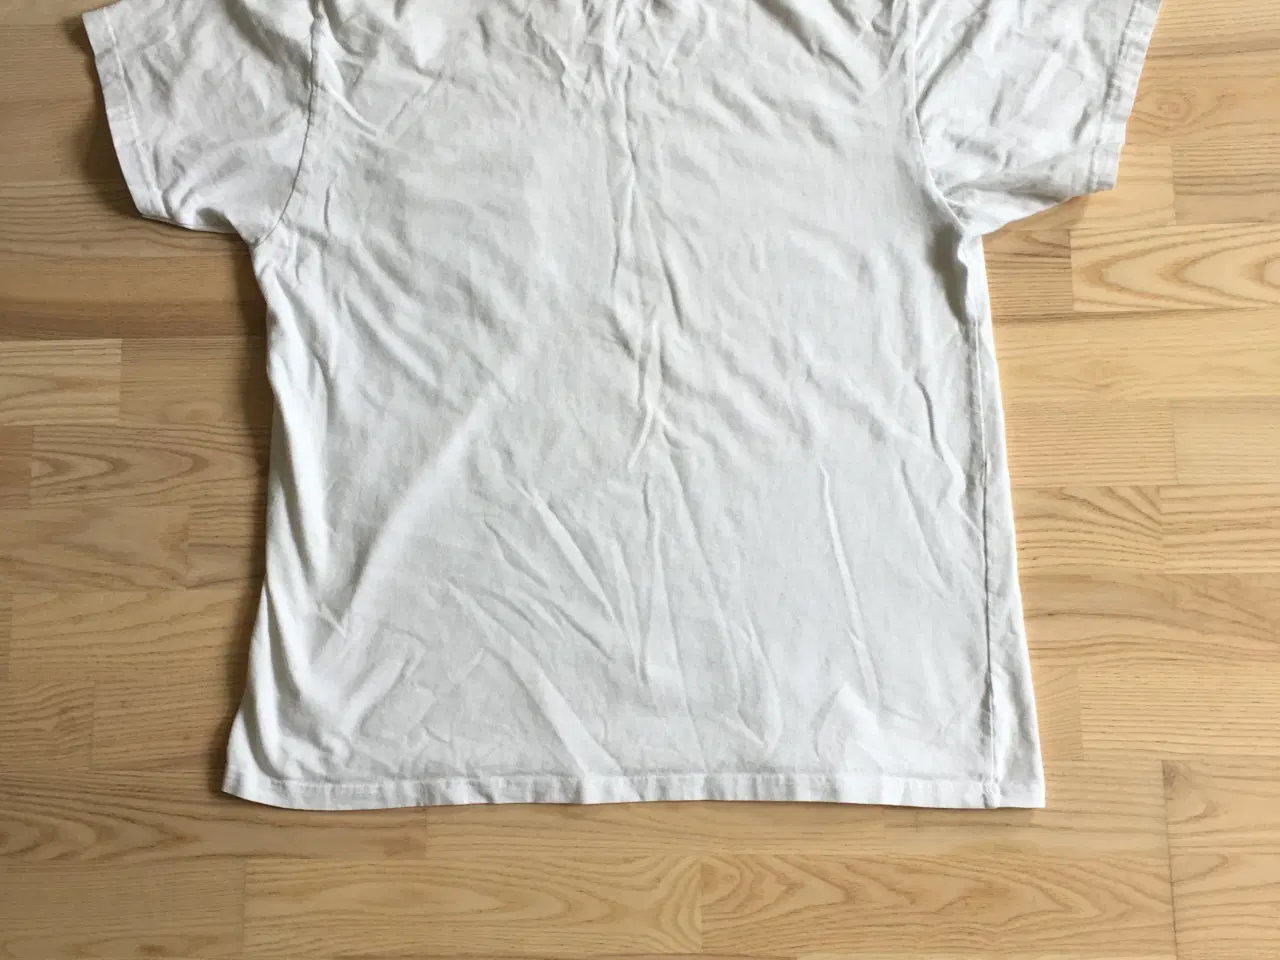 Billede 2 - 3 Supreme t-shirts, str. XL